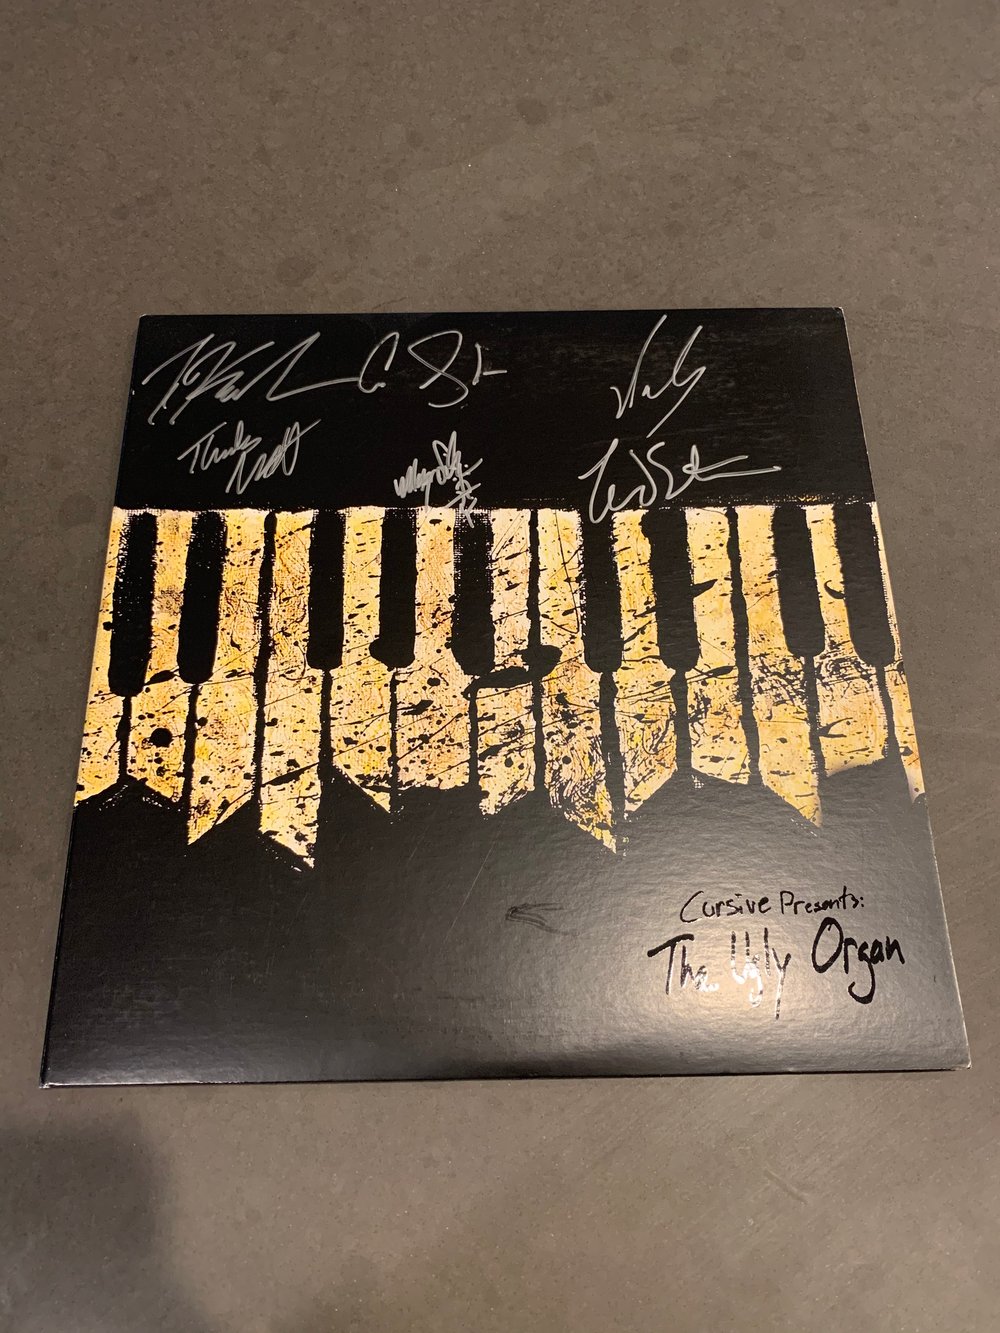 Cursive Autographed “The Ugly Organ” 2 LP Deluxe Version Vinyl Record